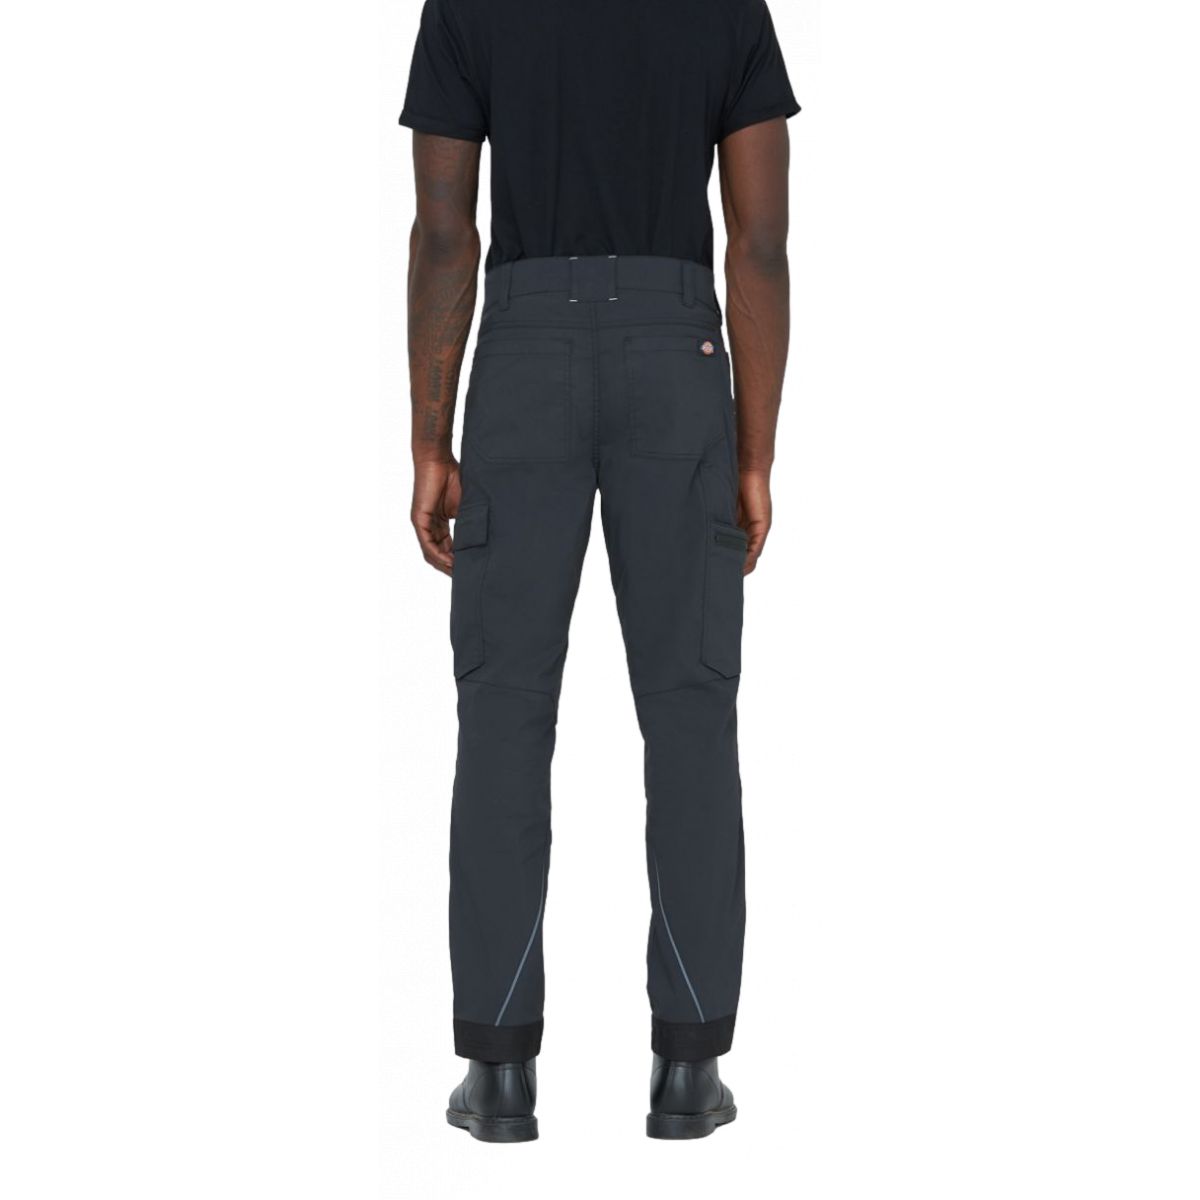 Pantalon léger Flex Noir - Dickies - Taille 54 3